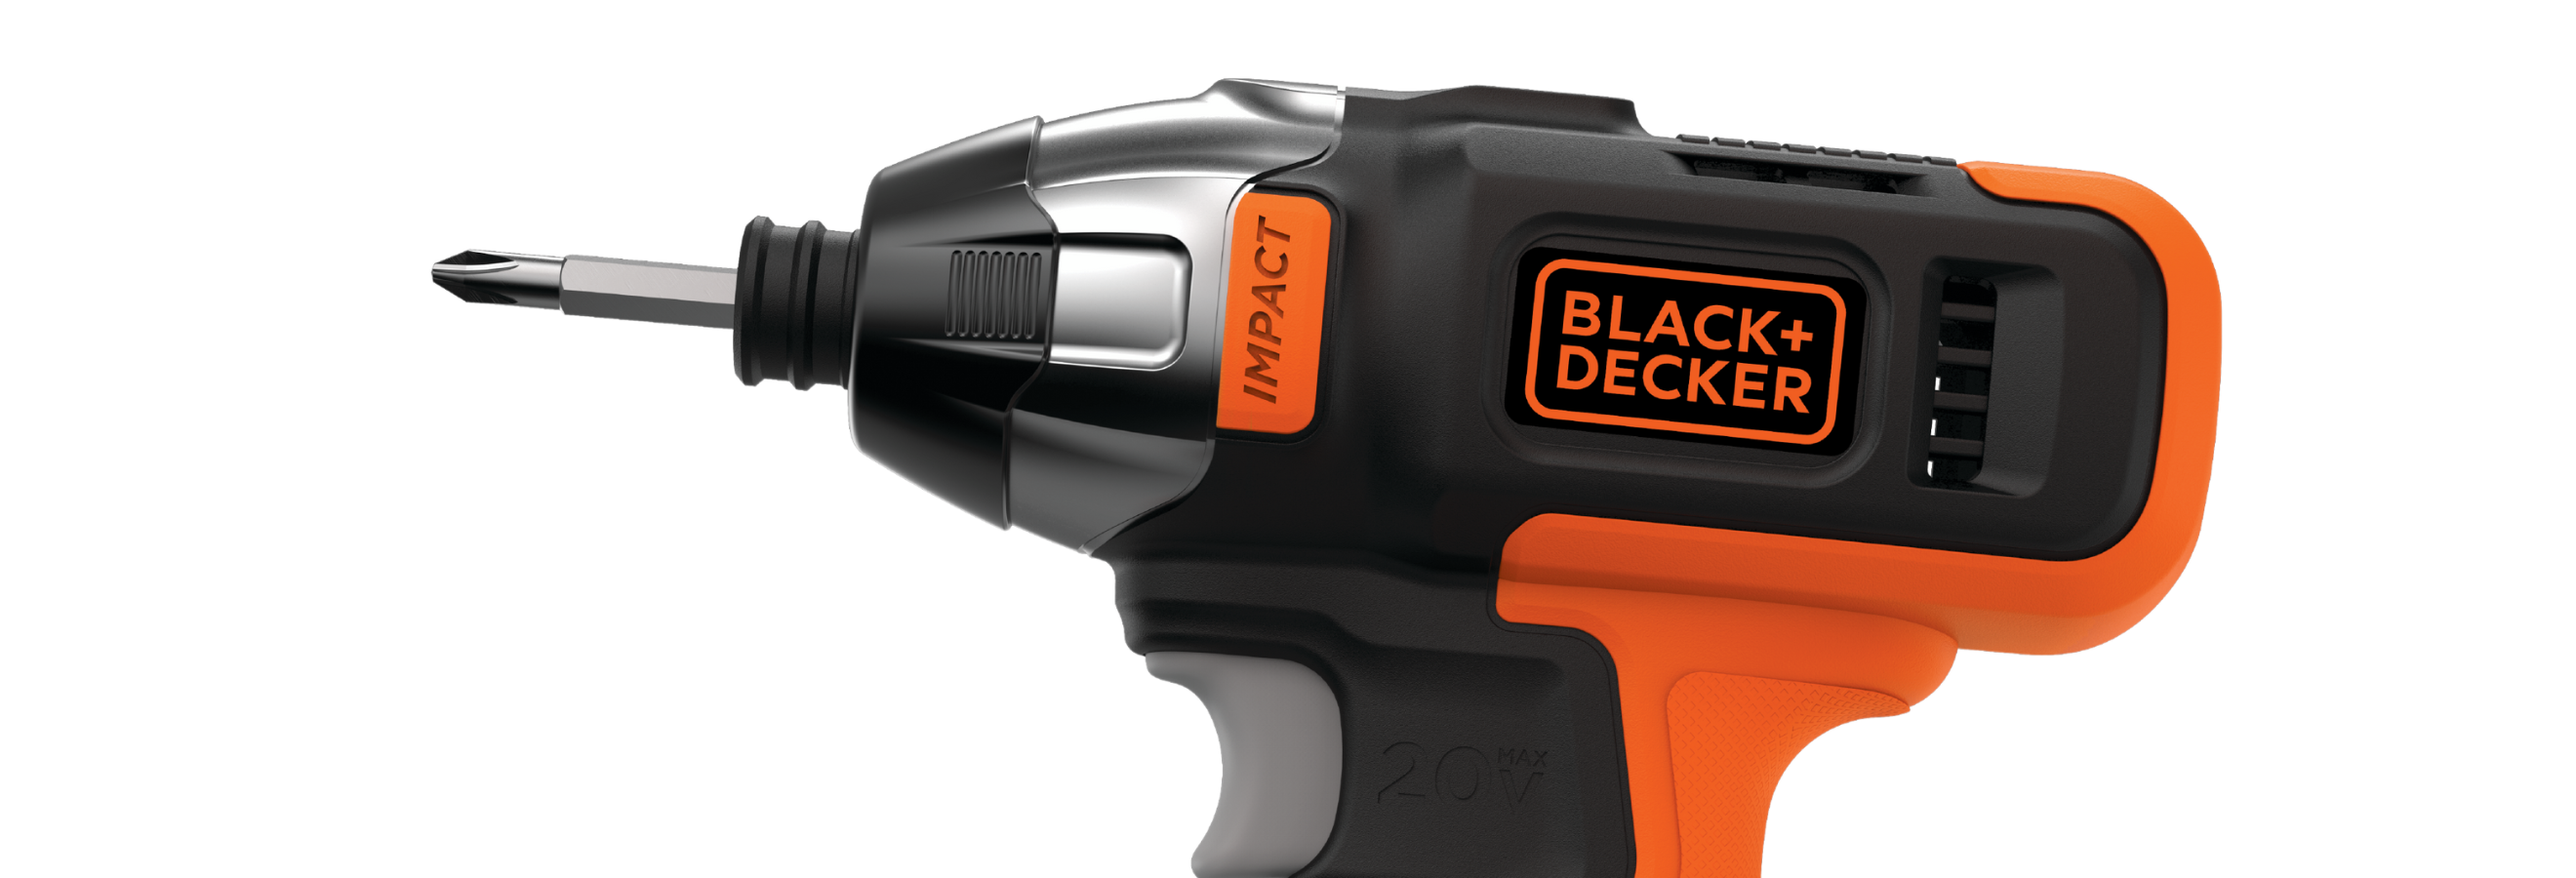 Black & Decker heavy duty industrial 1/2 drive elect impact wrench #2670  works.